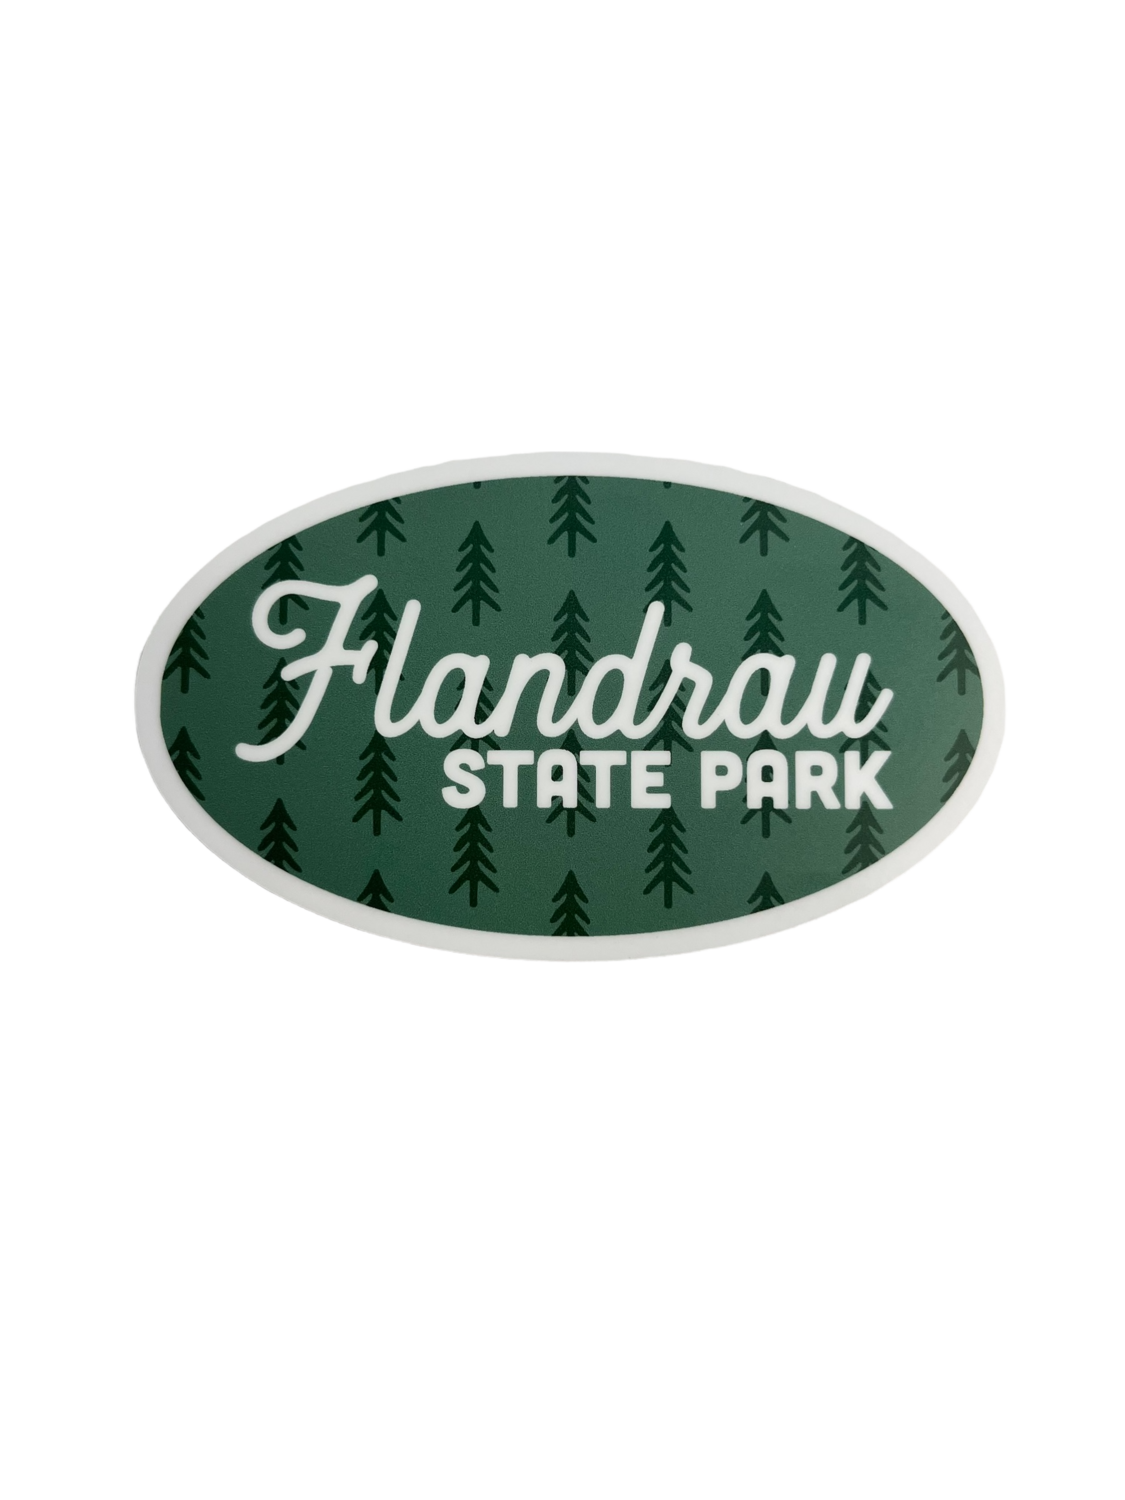 Flandrau State Park Sticker-1456N-LSTK